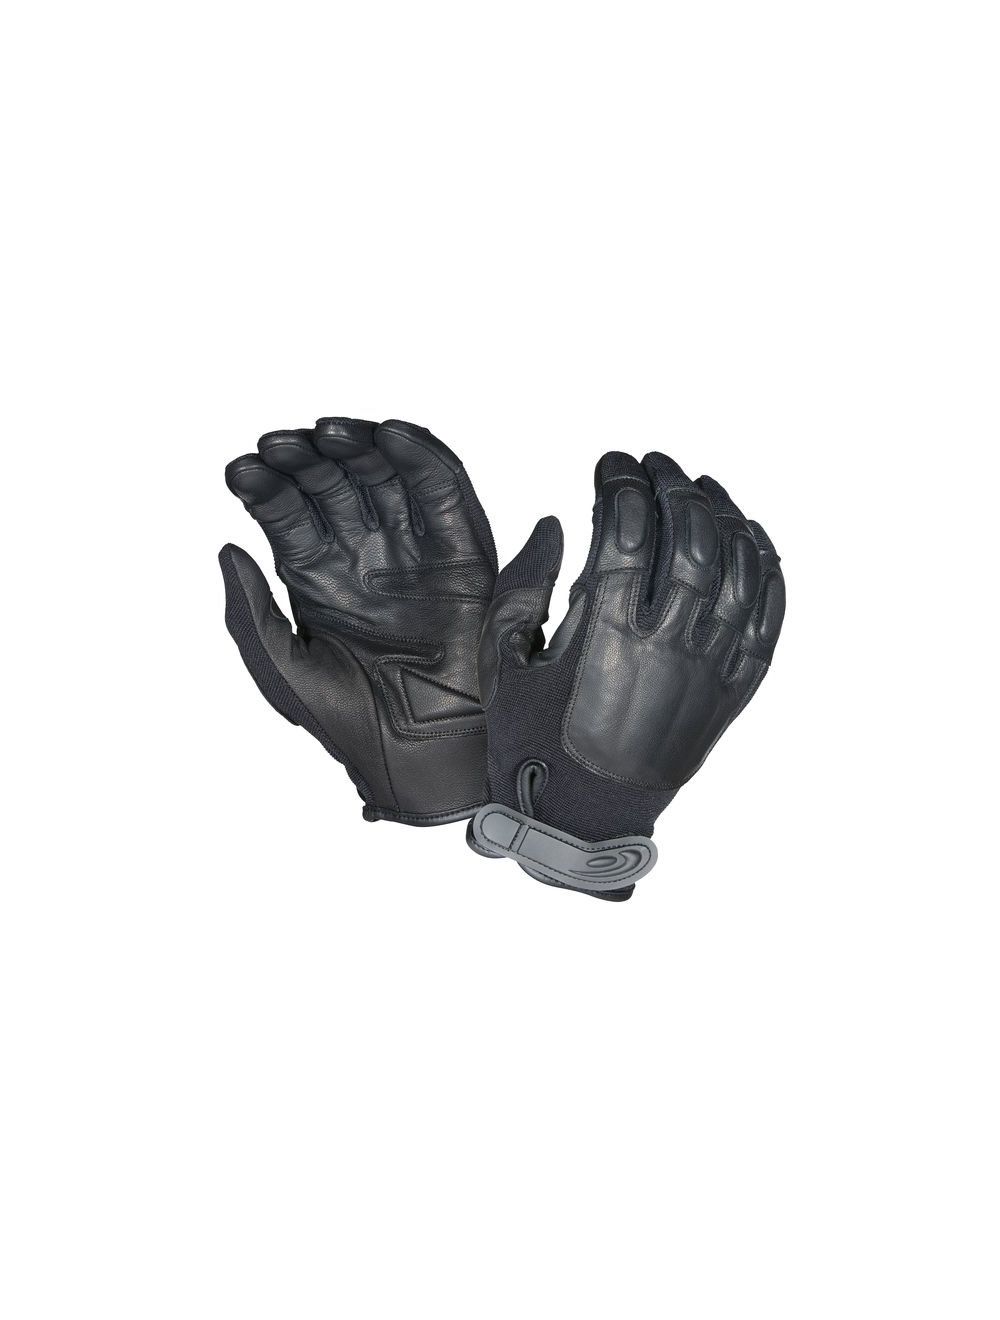 Defender II Riot Control Glove w/ Steel Shot